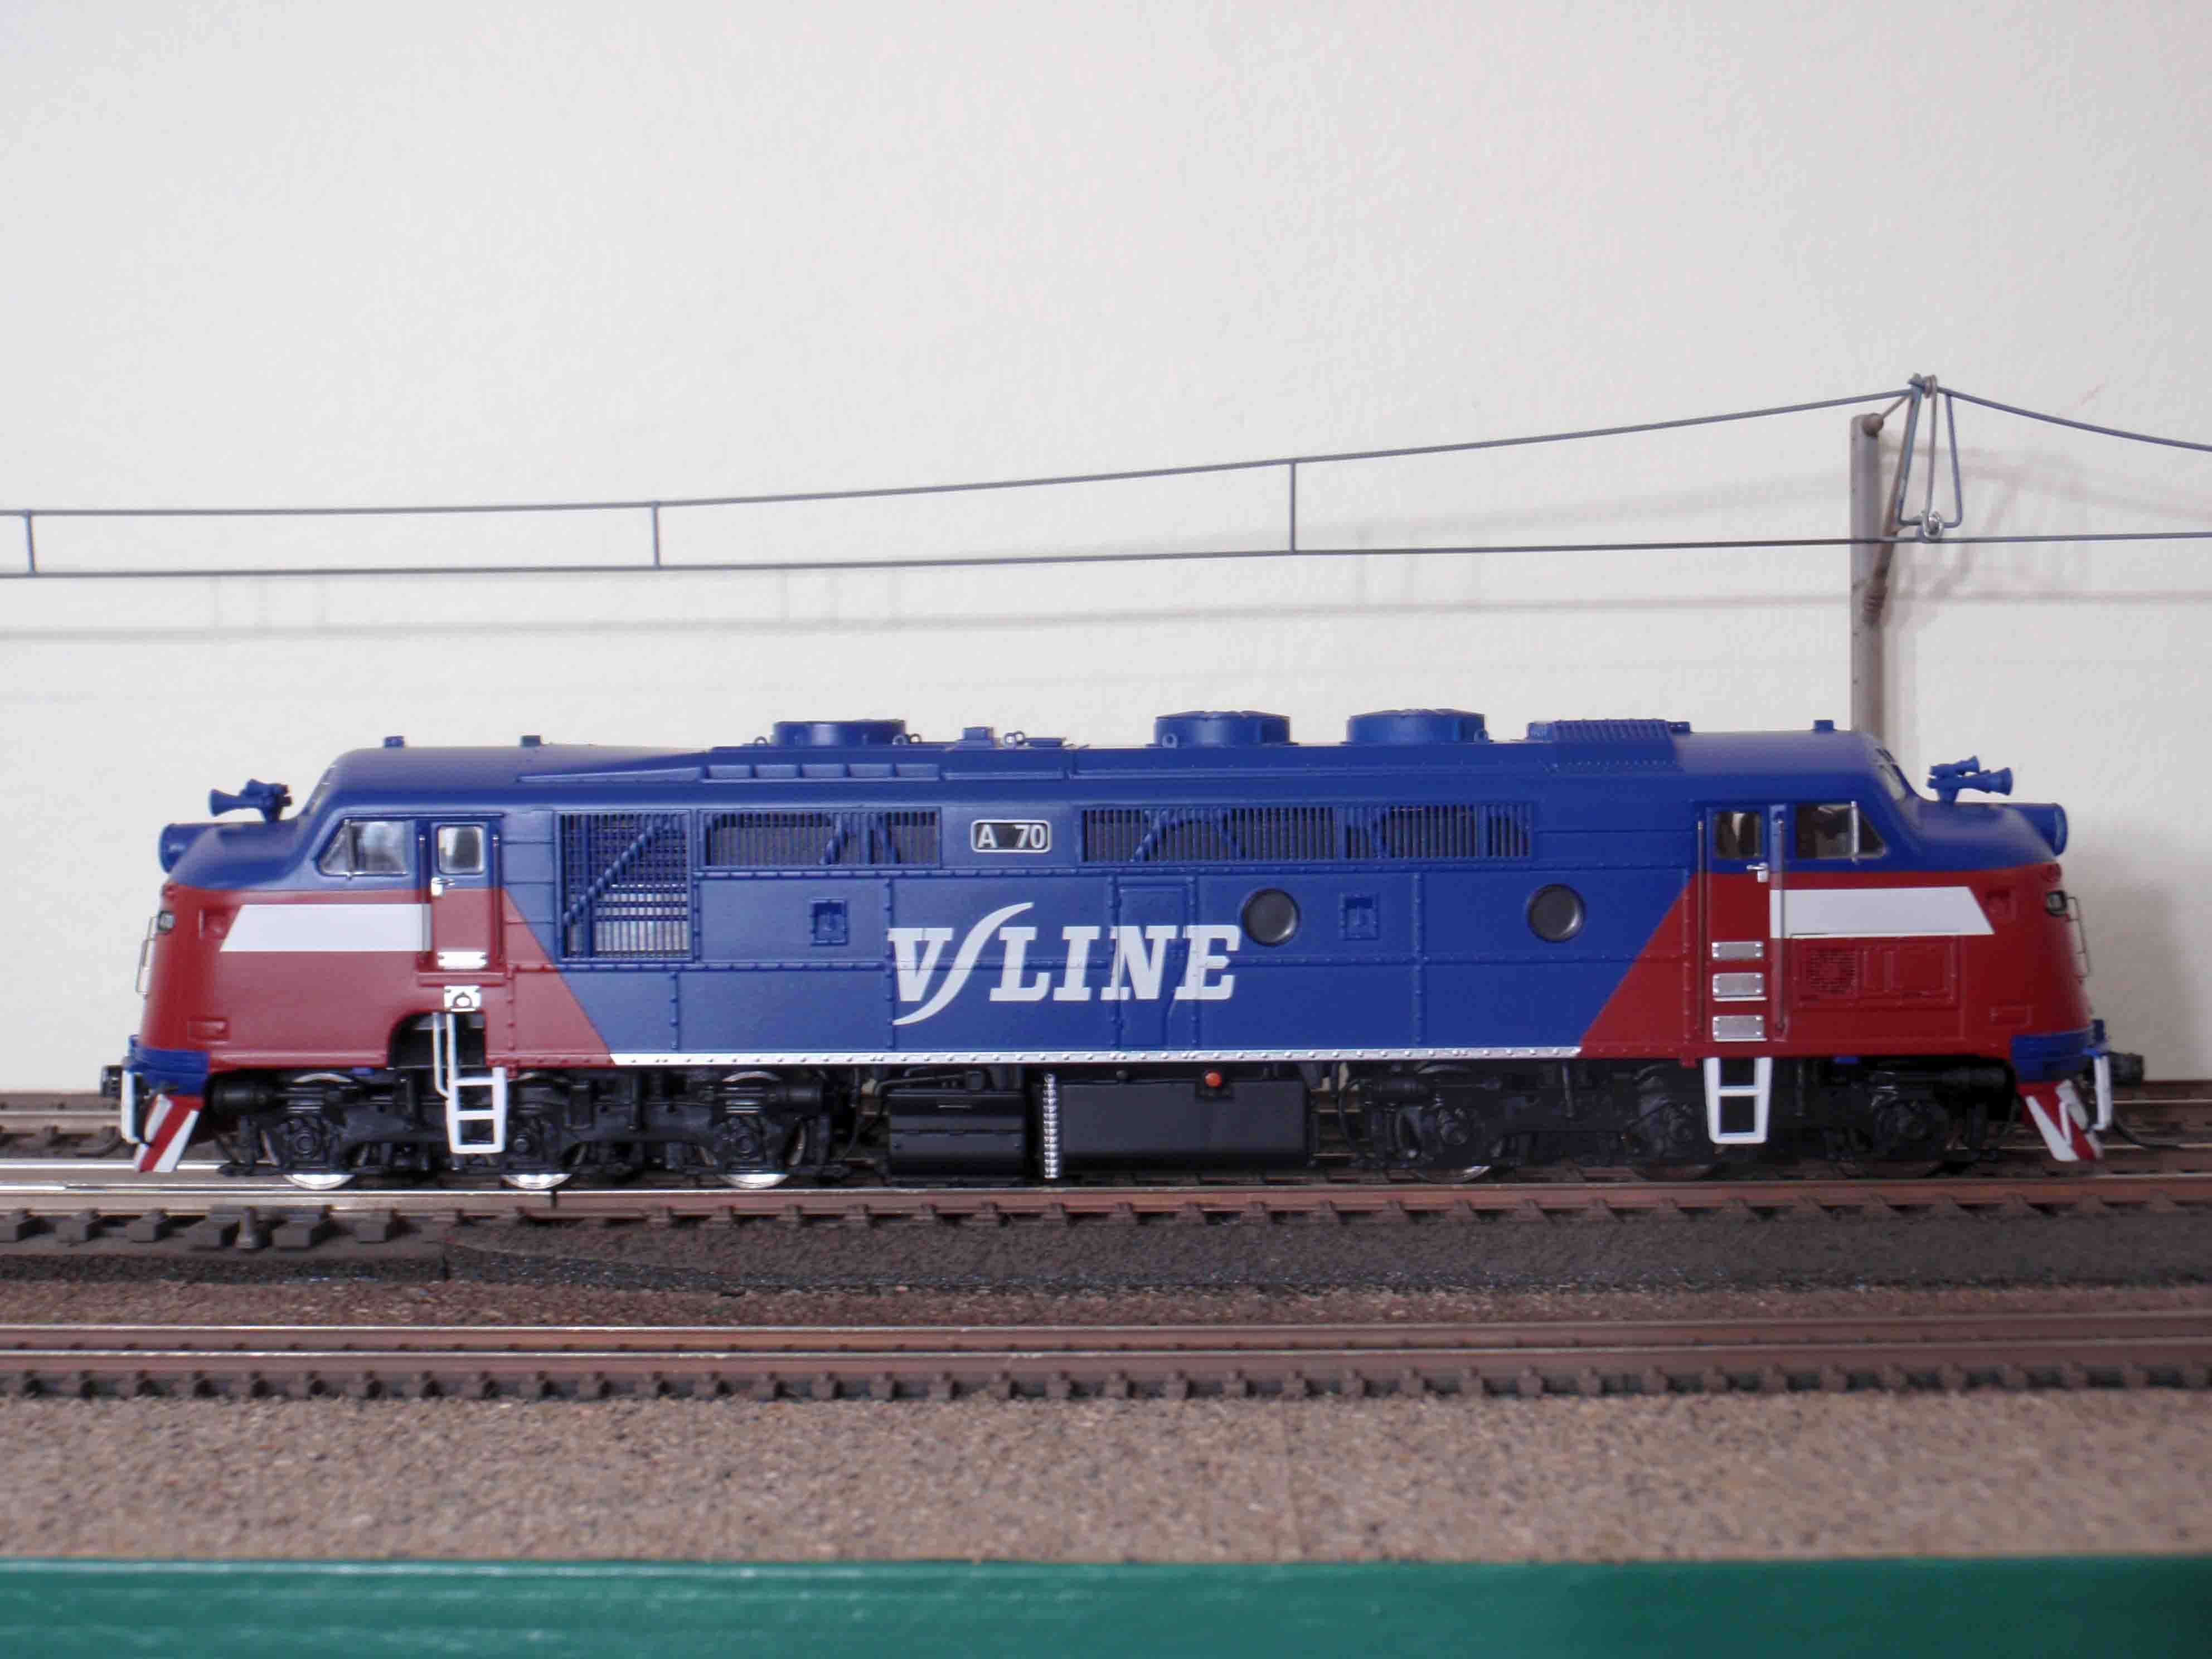 Auscision Models V/Line 'A' Class diesel locomotive A70